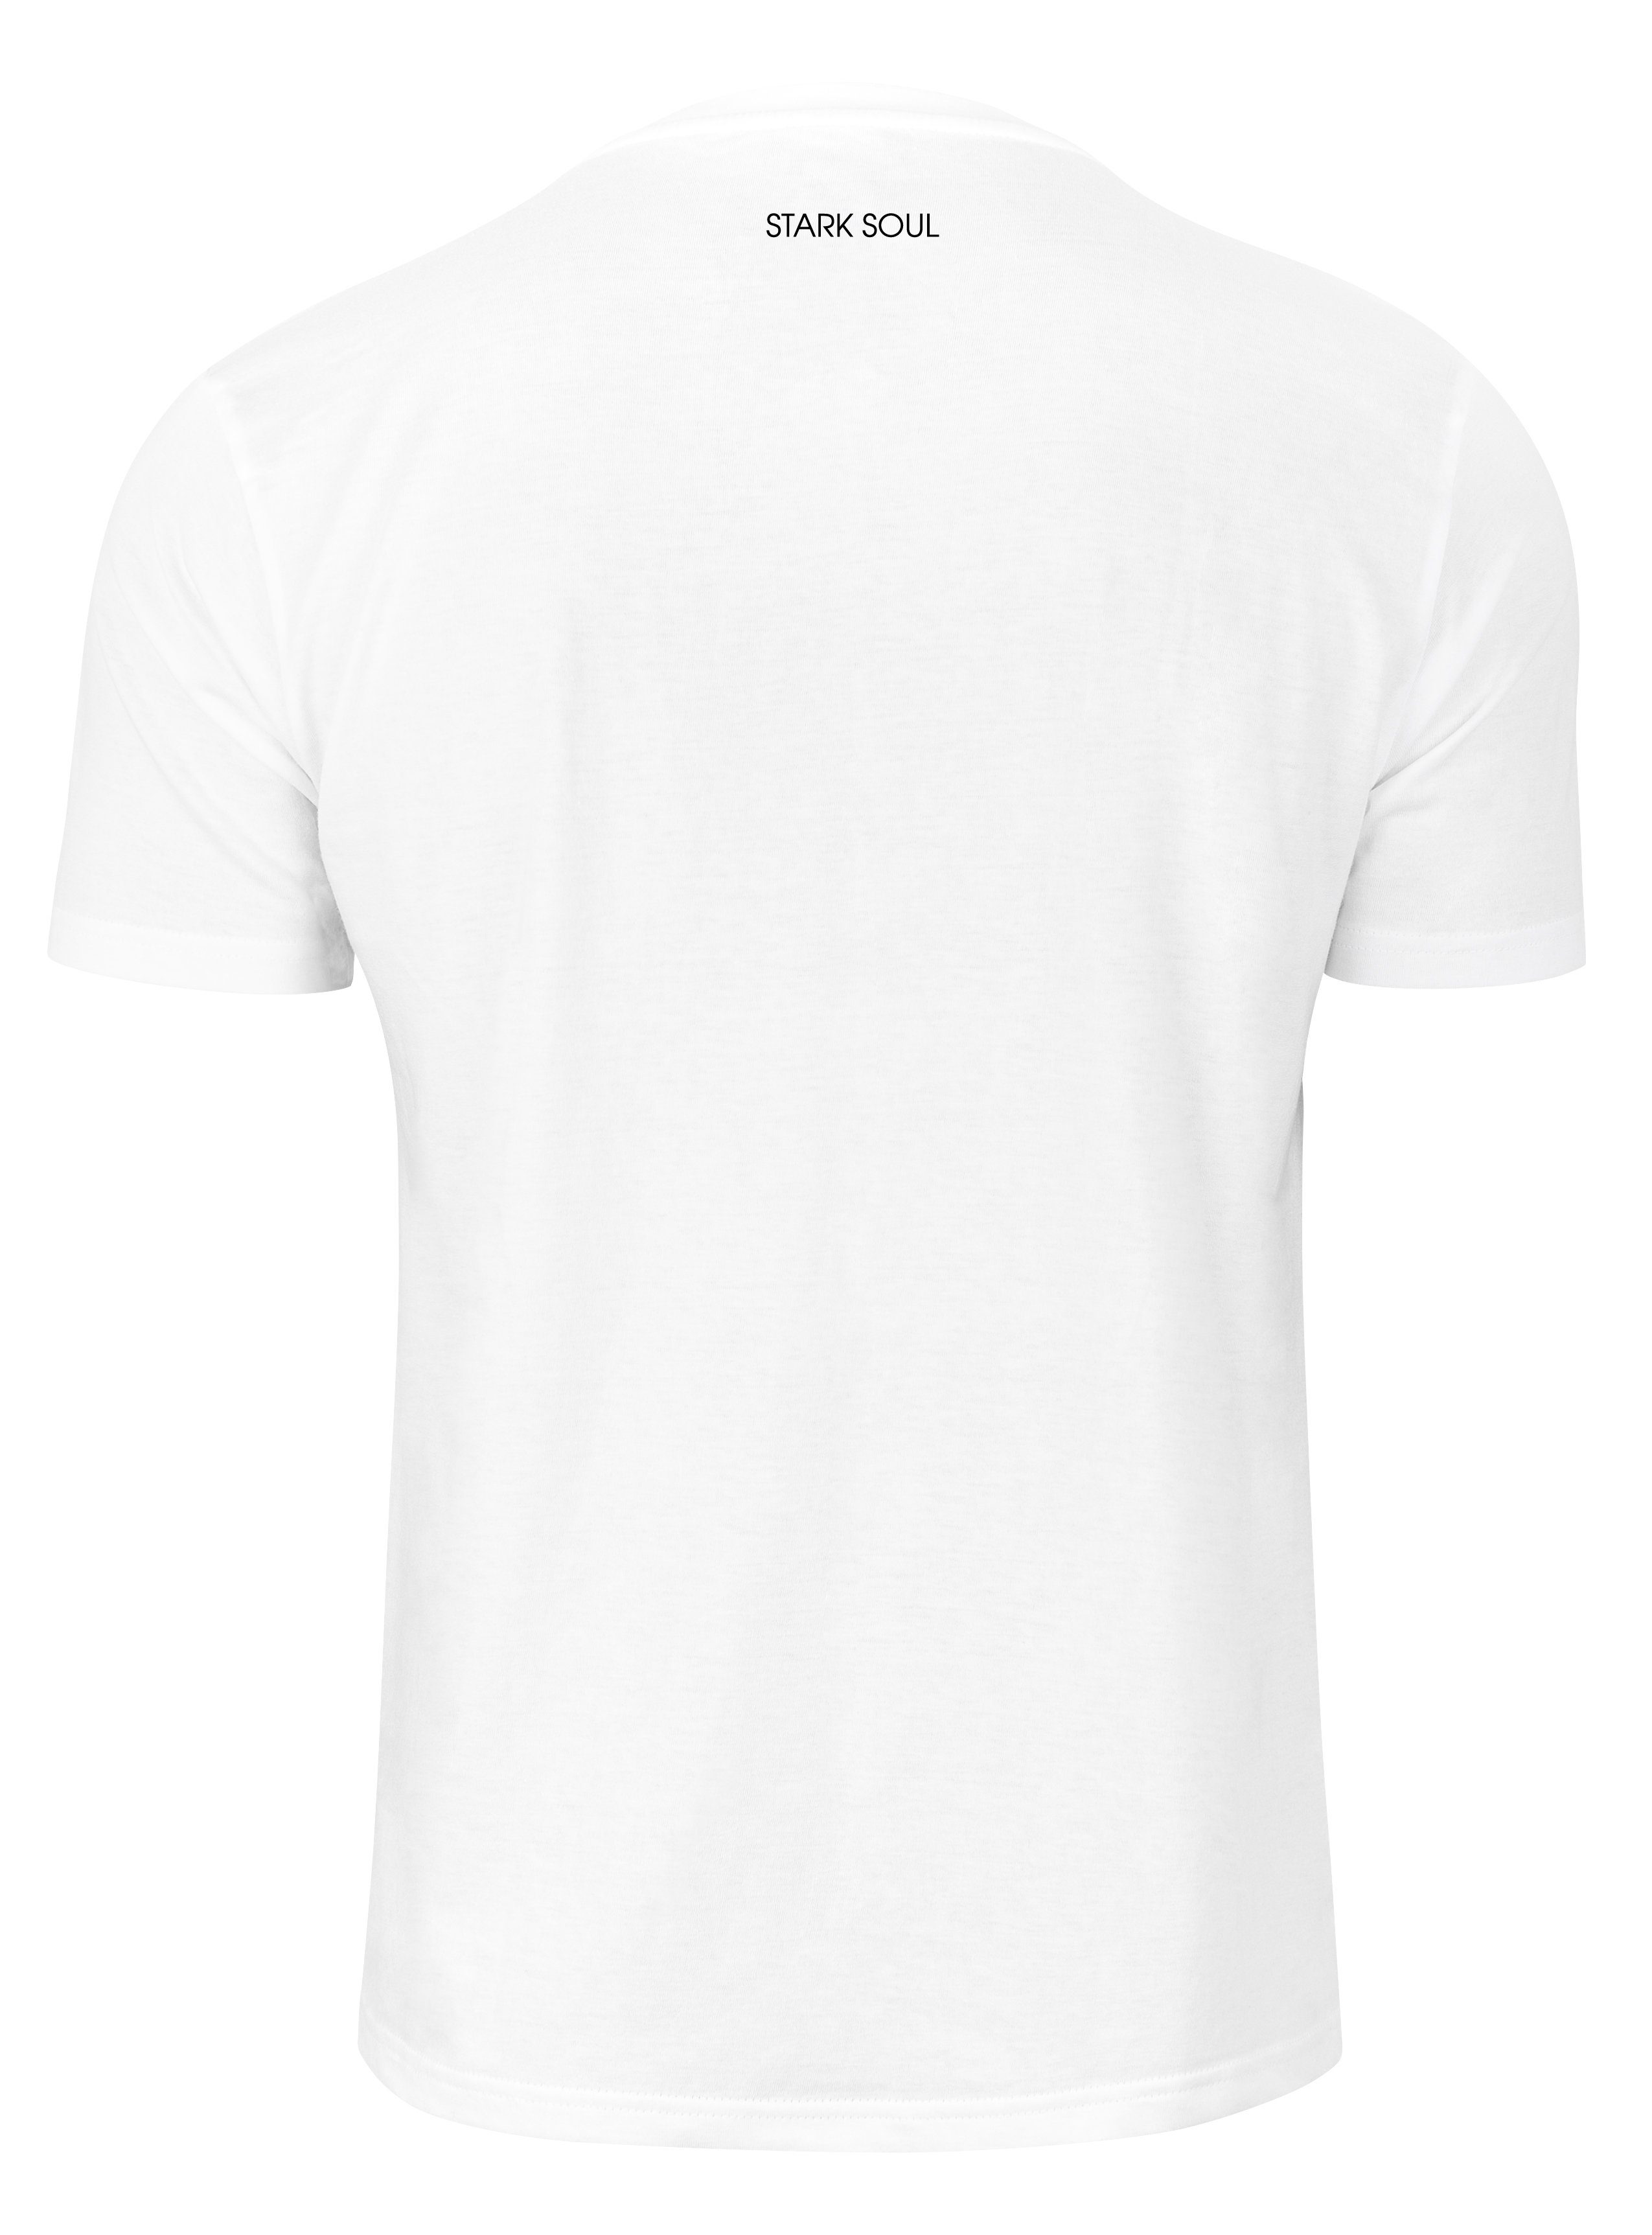 Stark Soul® T-Shirt T-Shirt Weiß Casual Cotton mit Logo